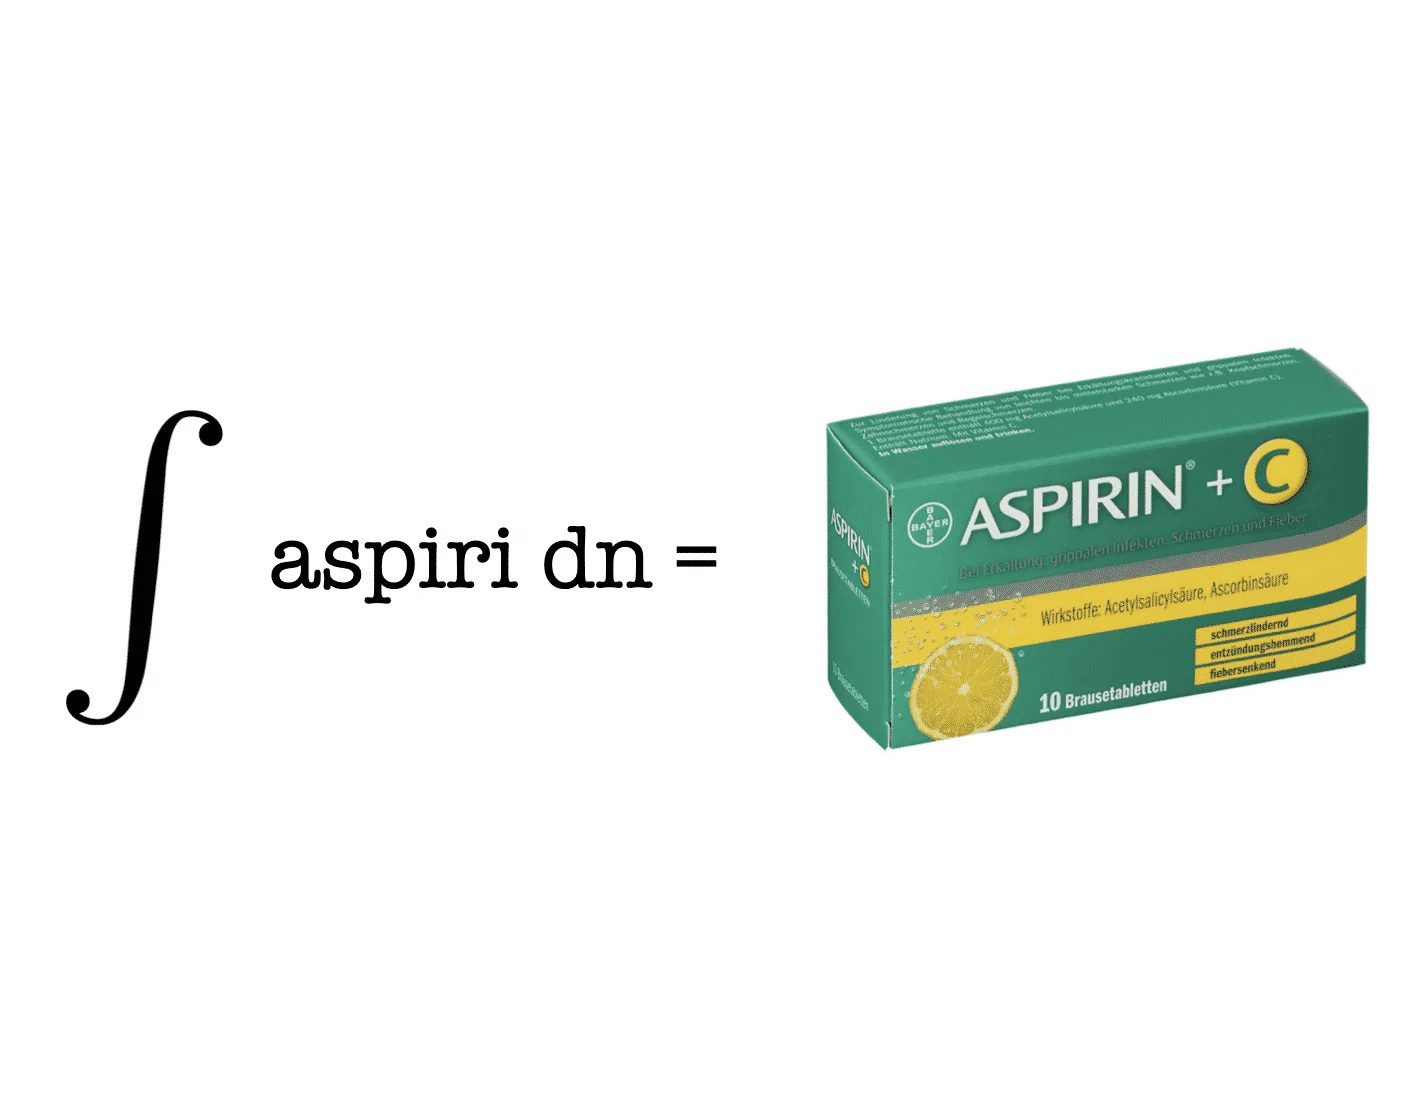 The Integral of Aspirin